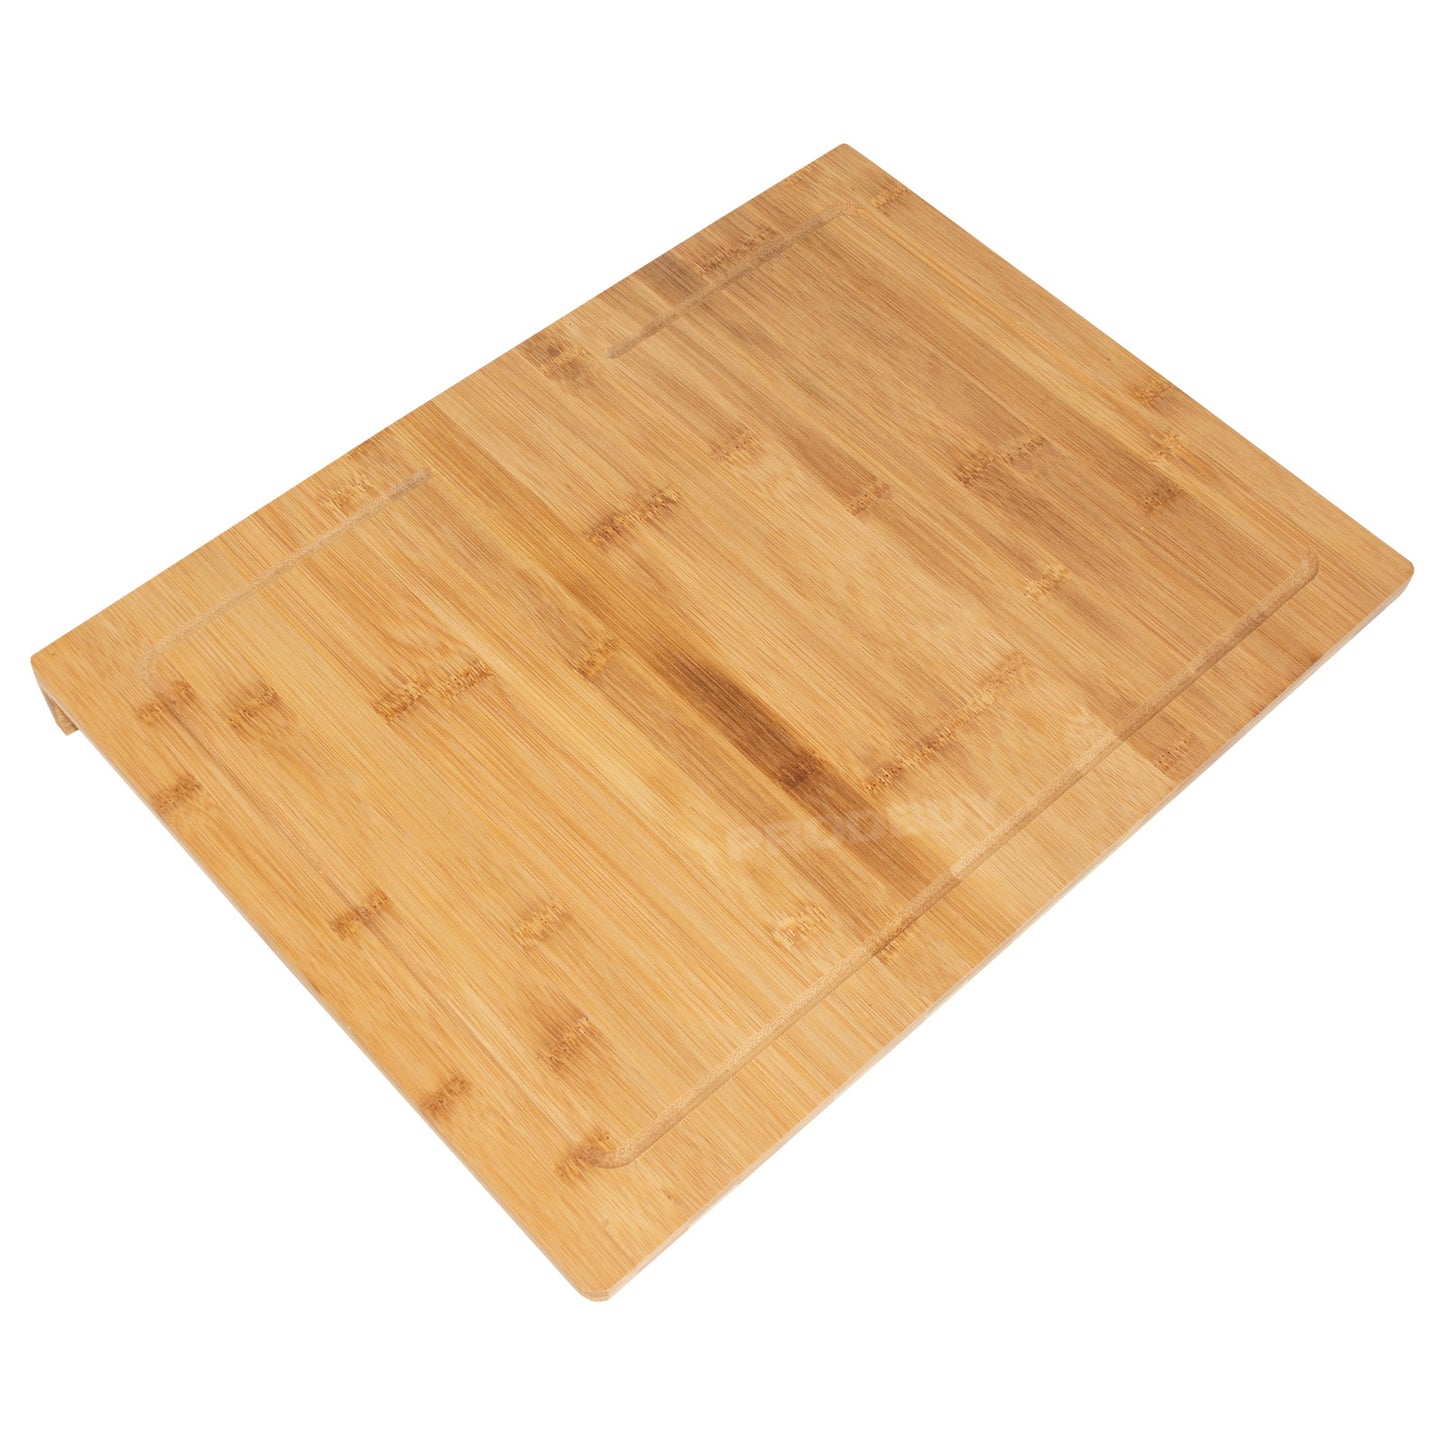 44cm x 33cm Over Edge Lipped Bamboo Chopping Board